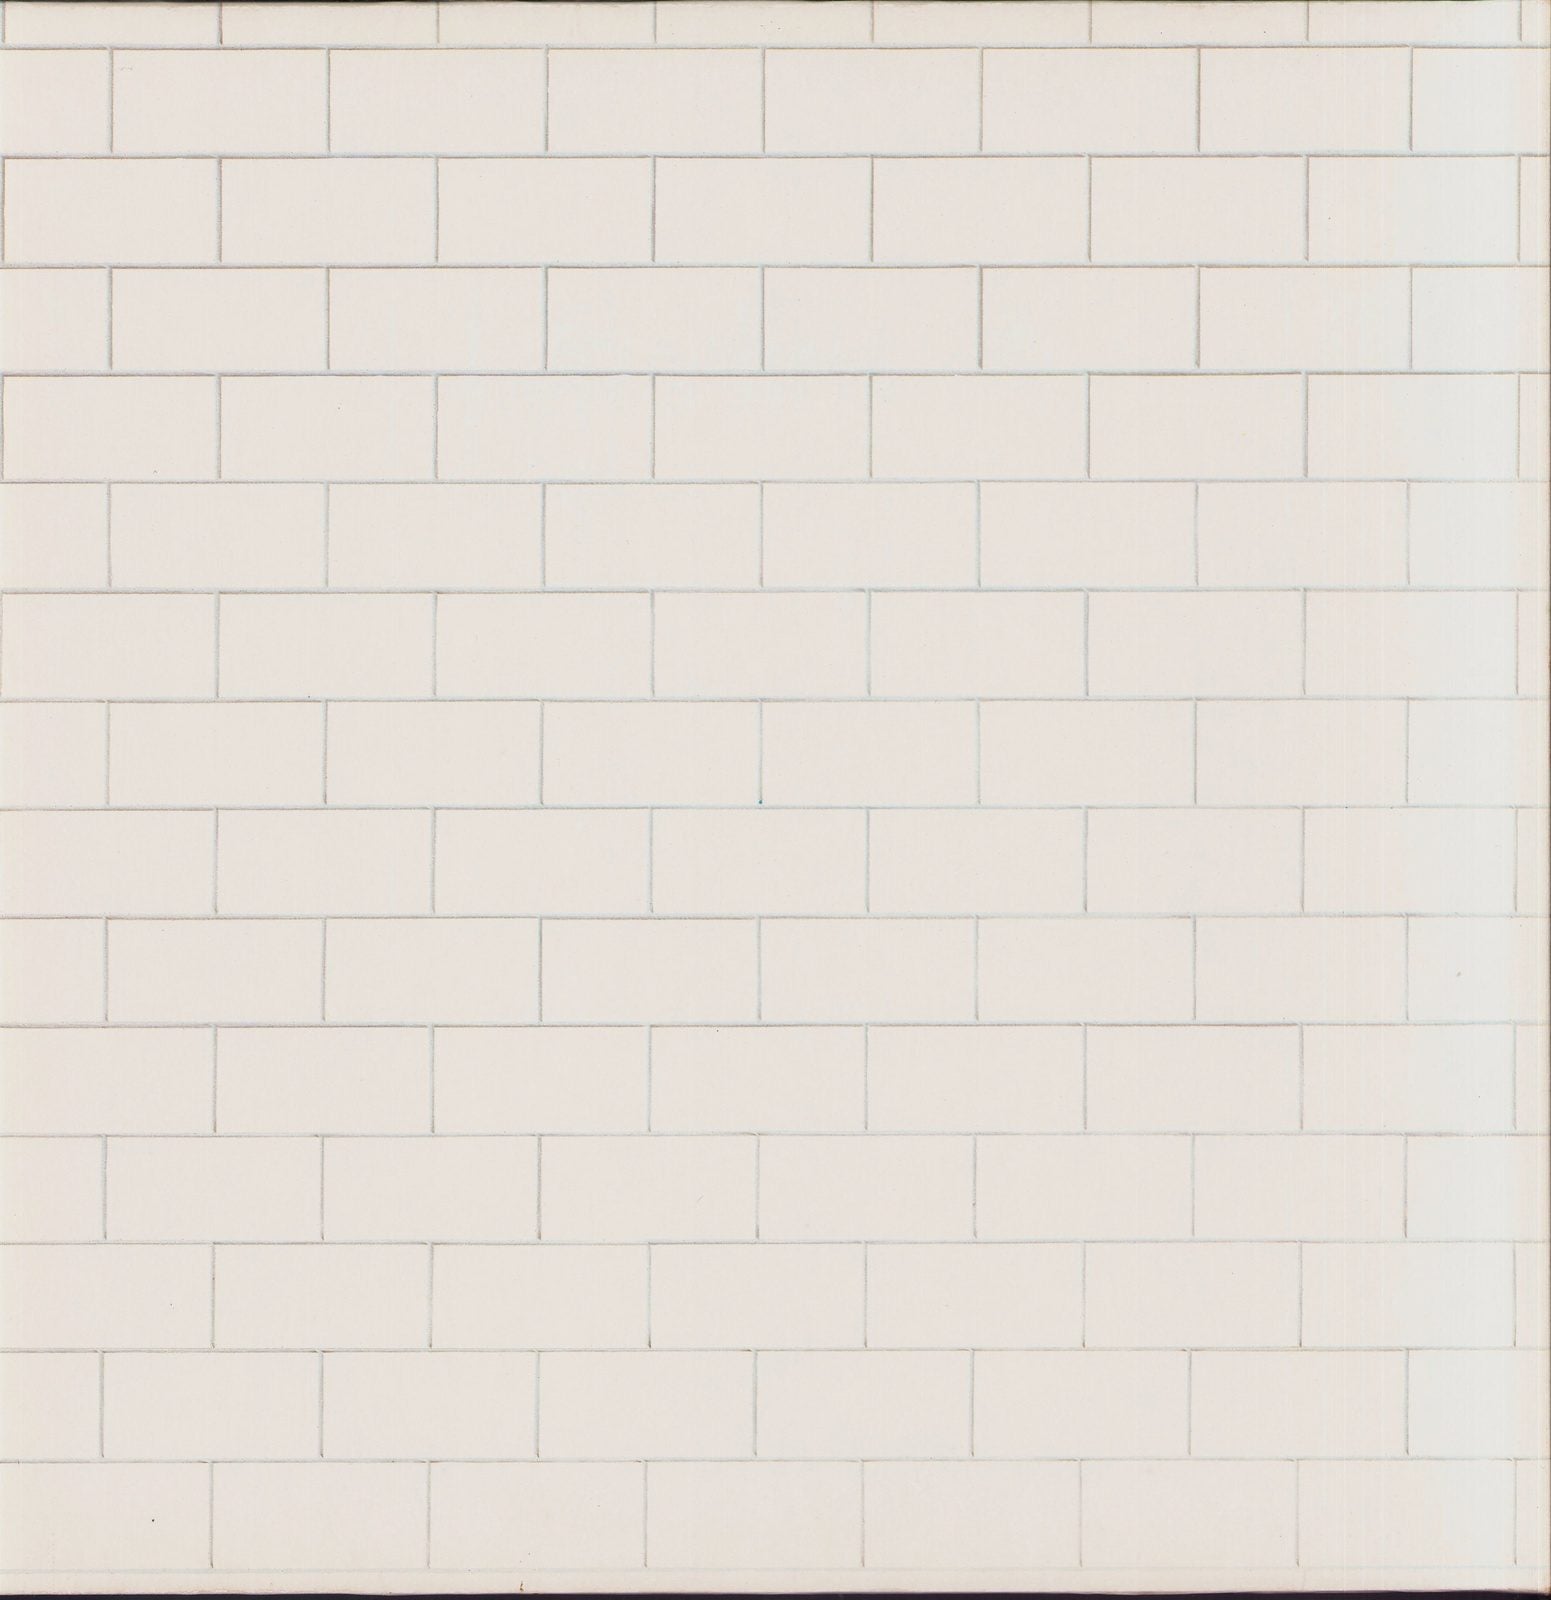 Pink Floyd - The Wall Vinyl 2LP